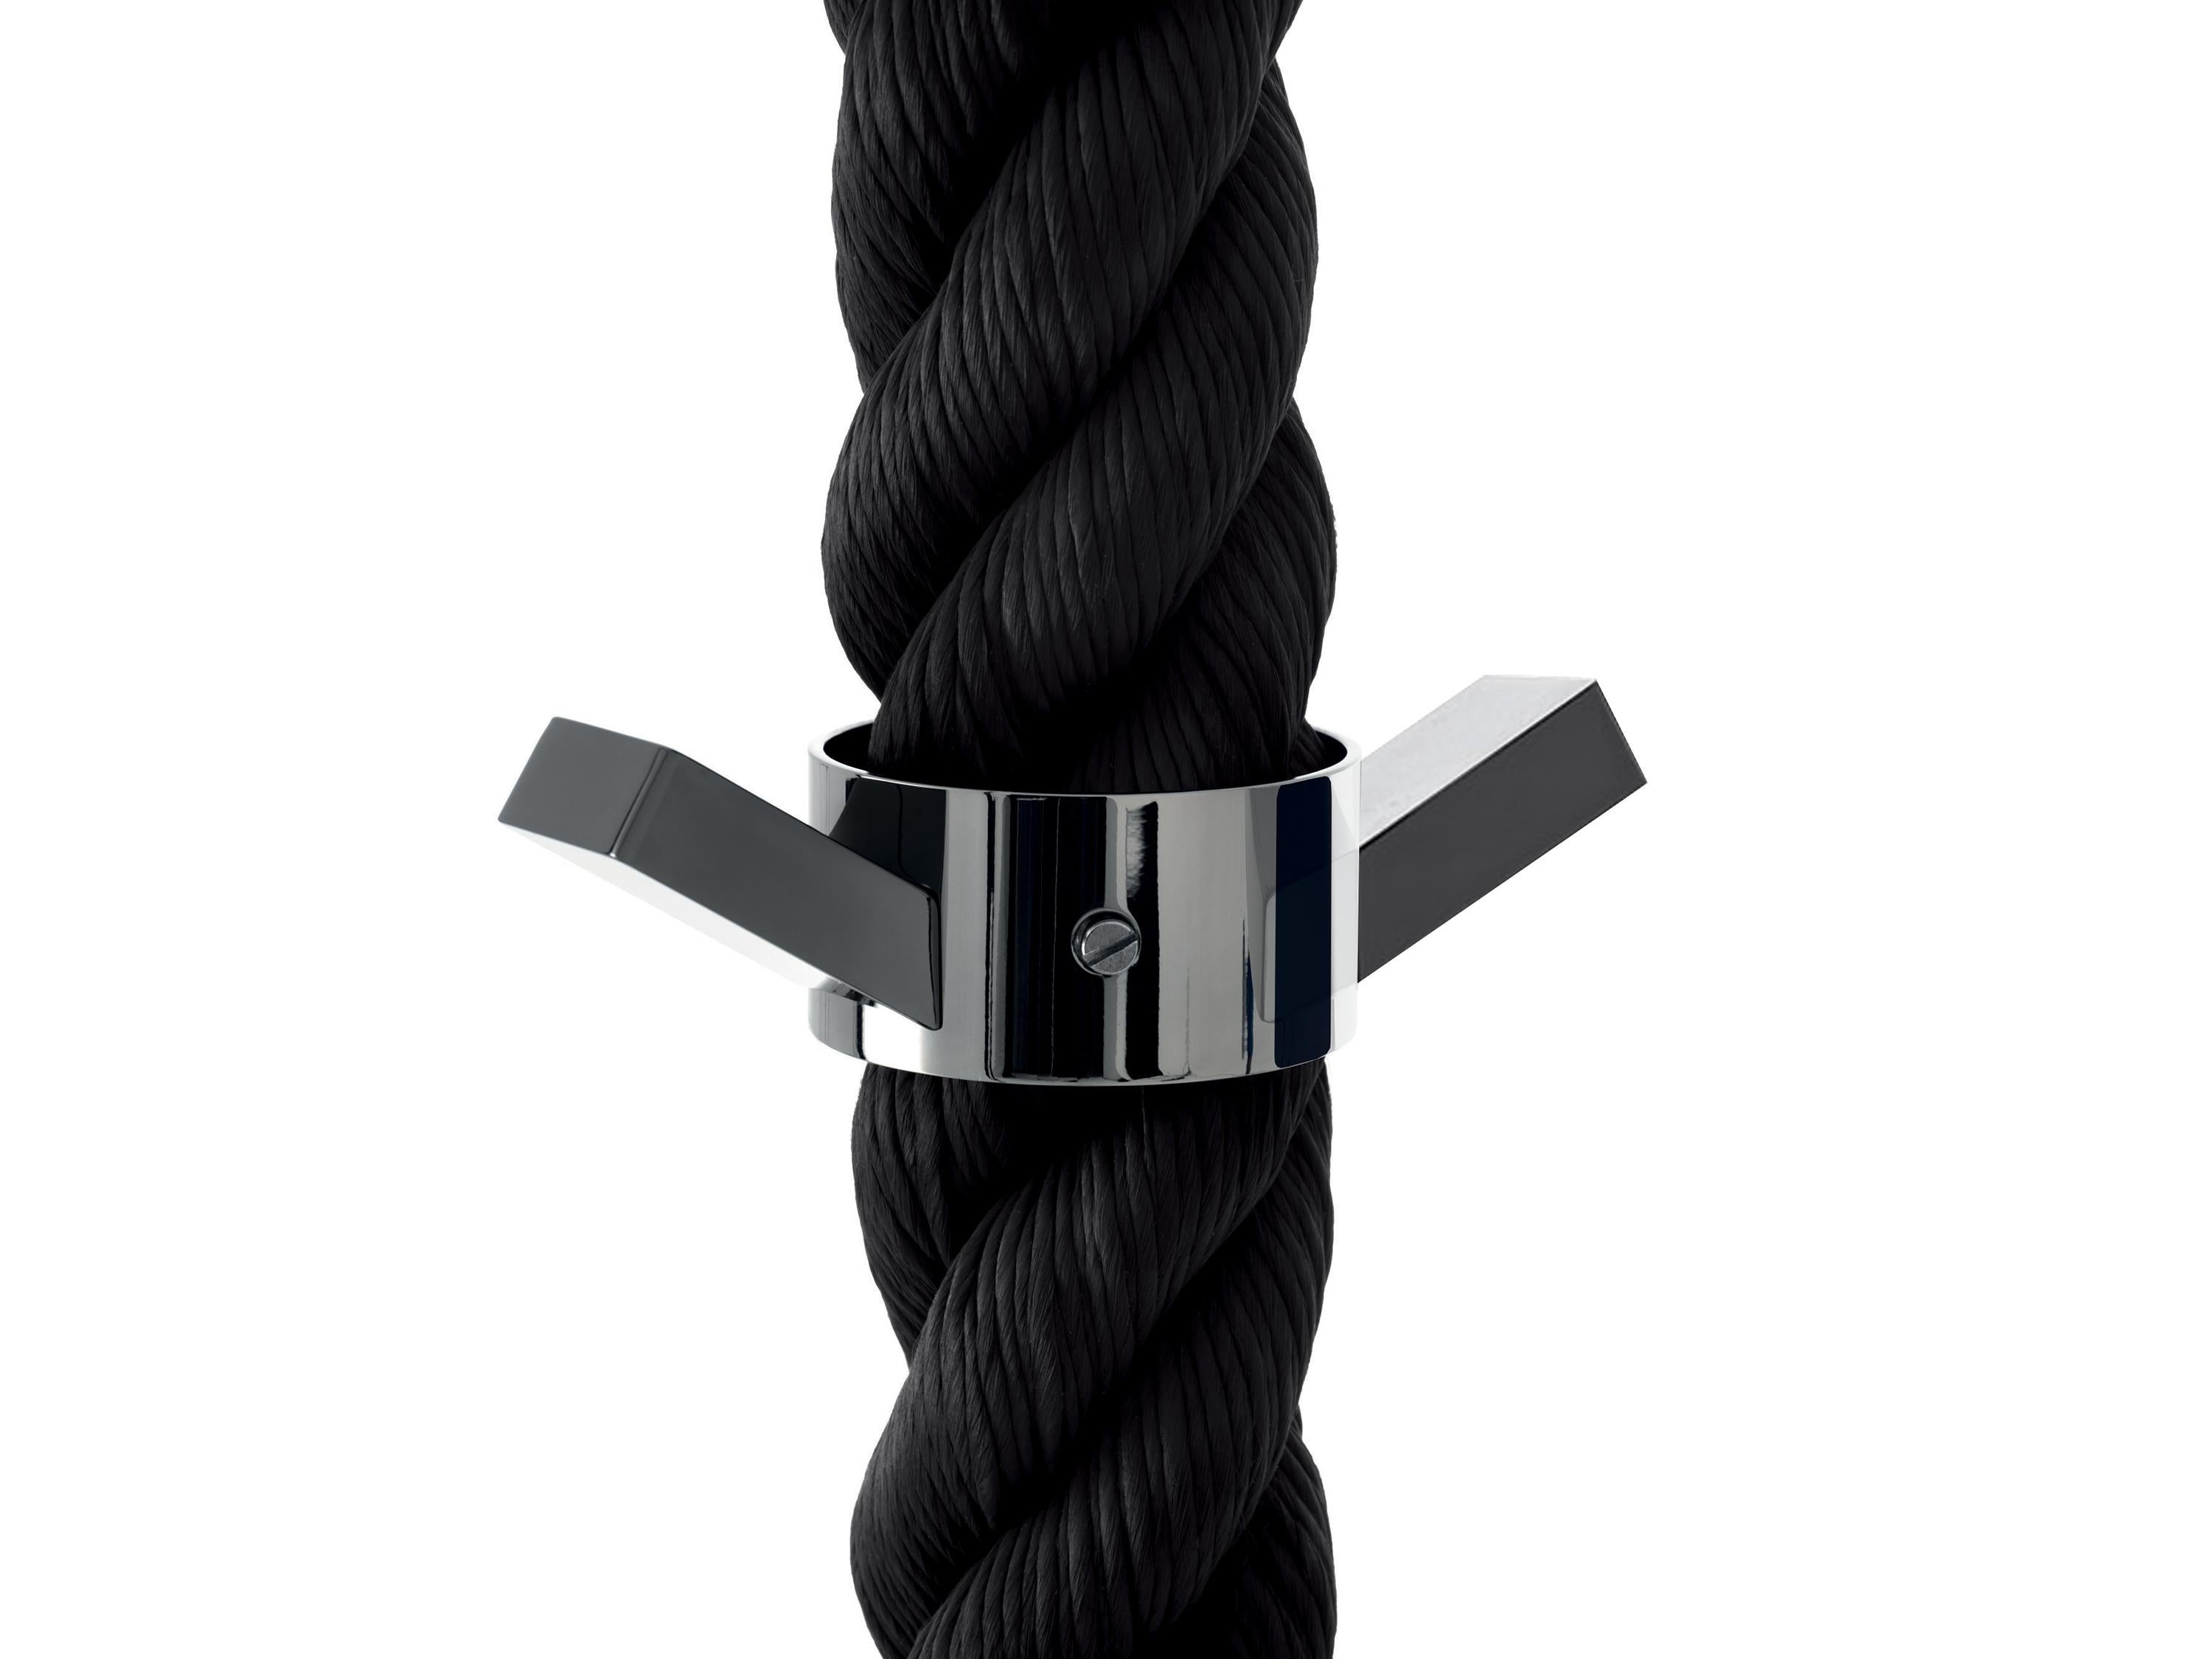 Im Angebot: Meinung Ciatti La Cima 3 Kleiderbügel, Black (Black Rope with Nickel Hardware)